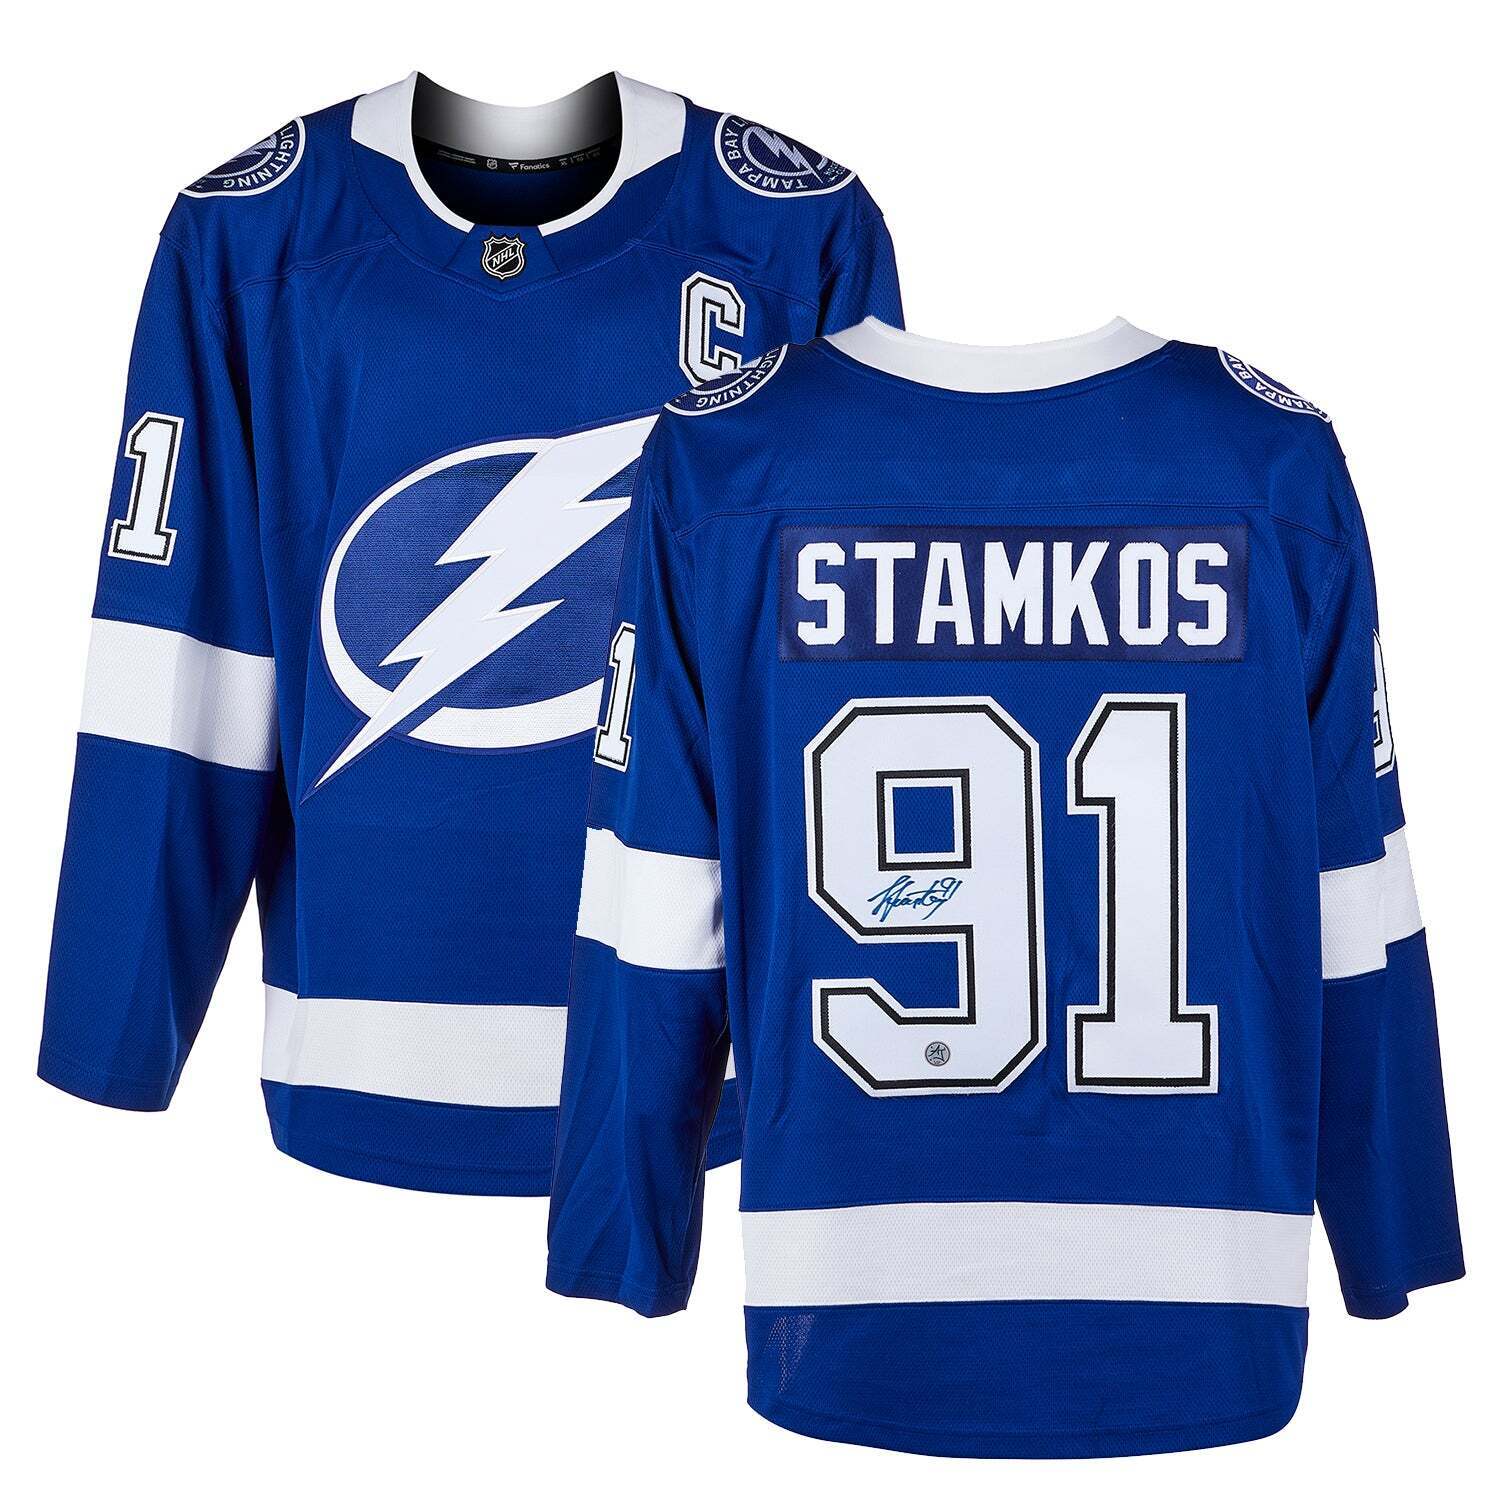 Steven Stamkos Autographed Tampa Bay Lightning Hockey Reebok